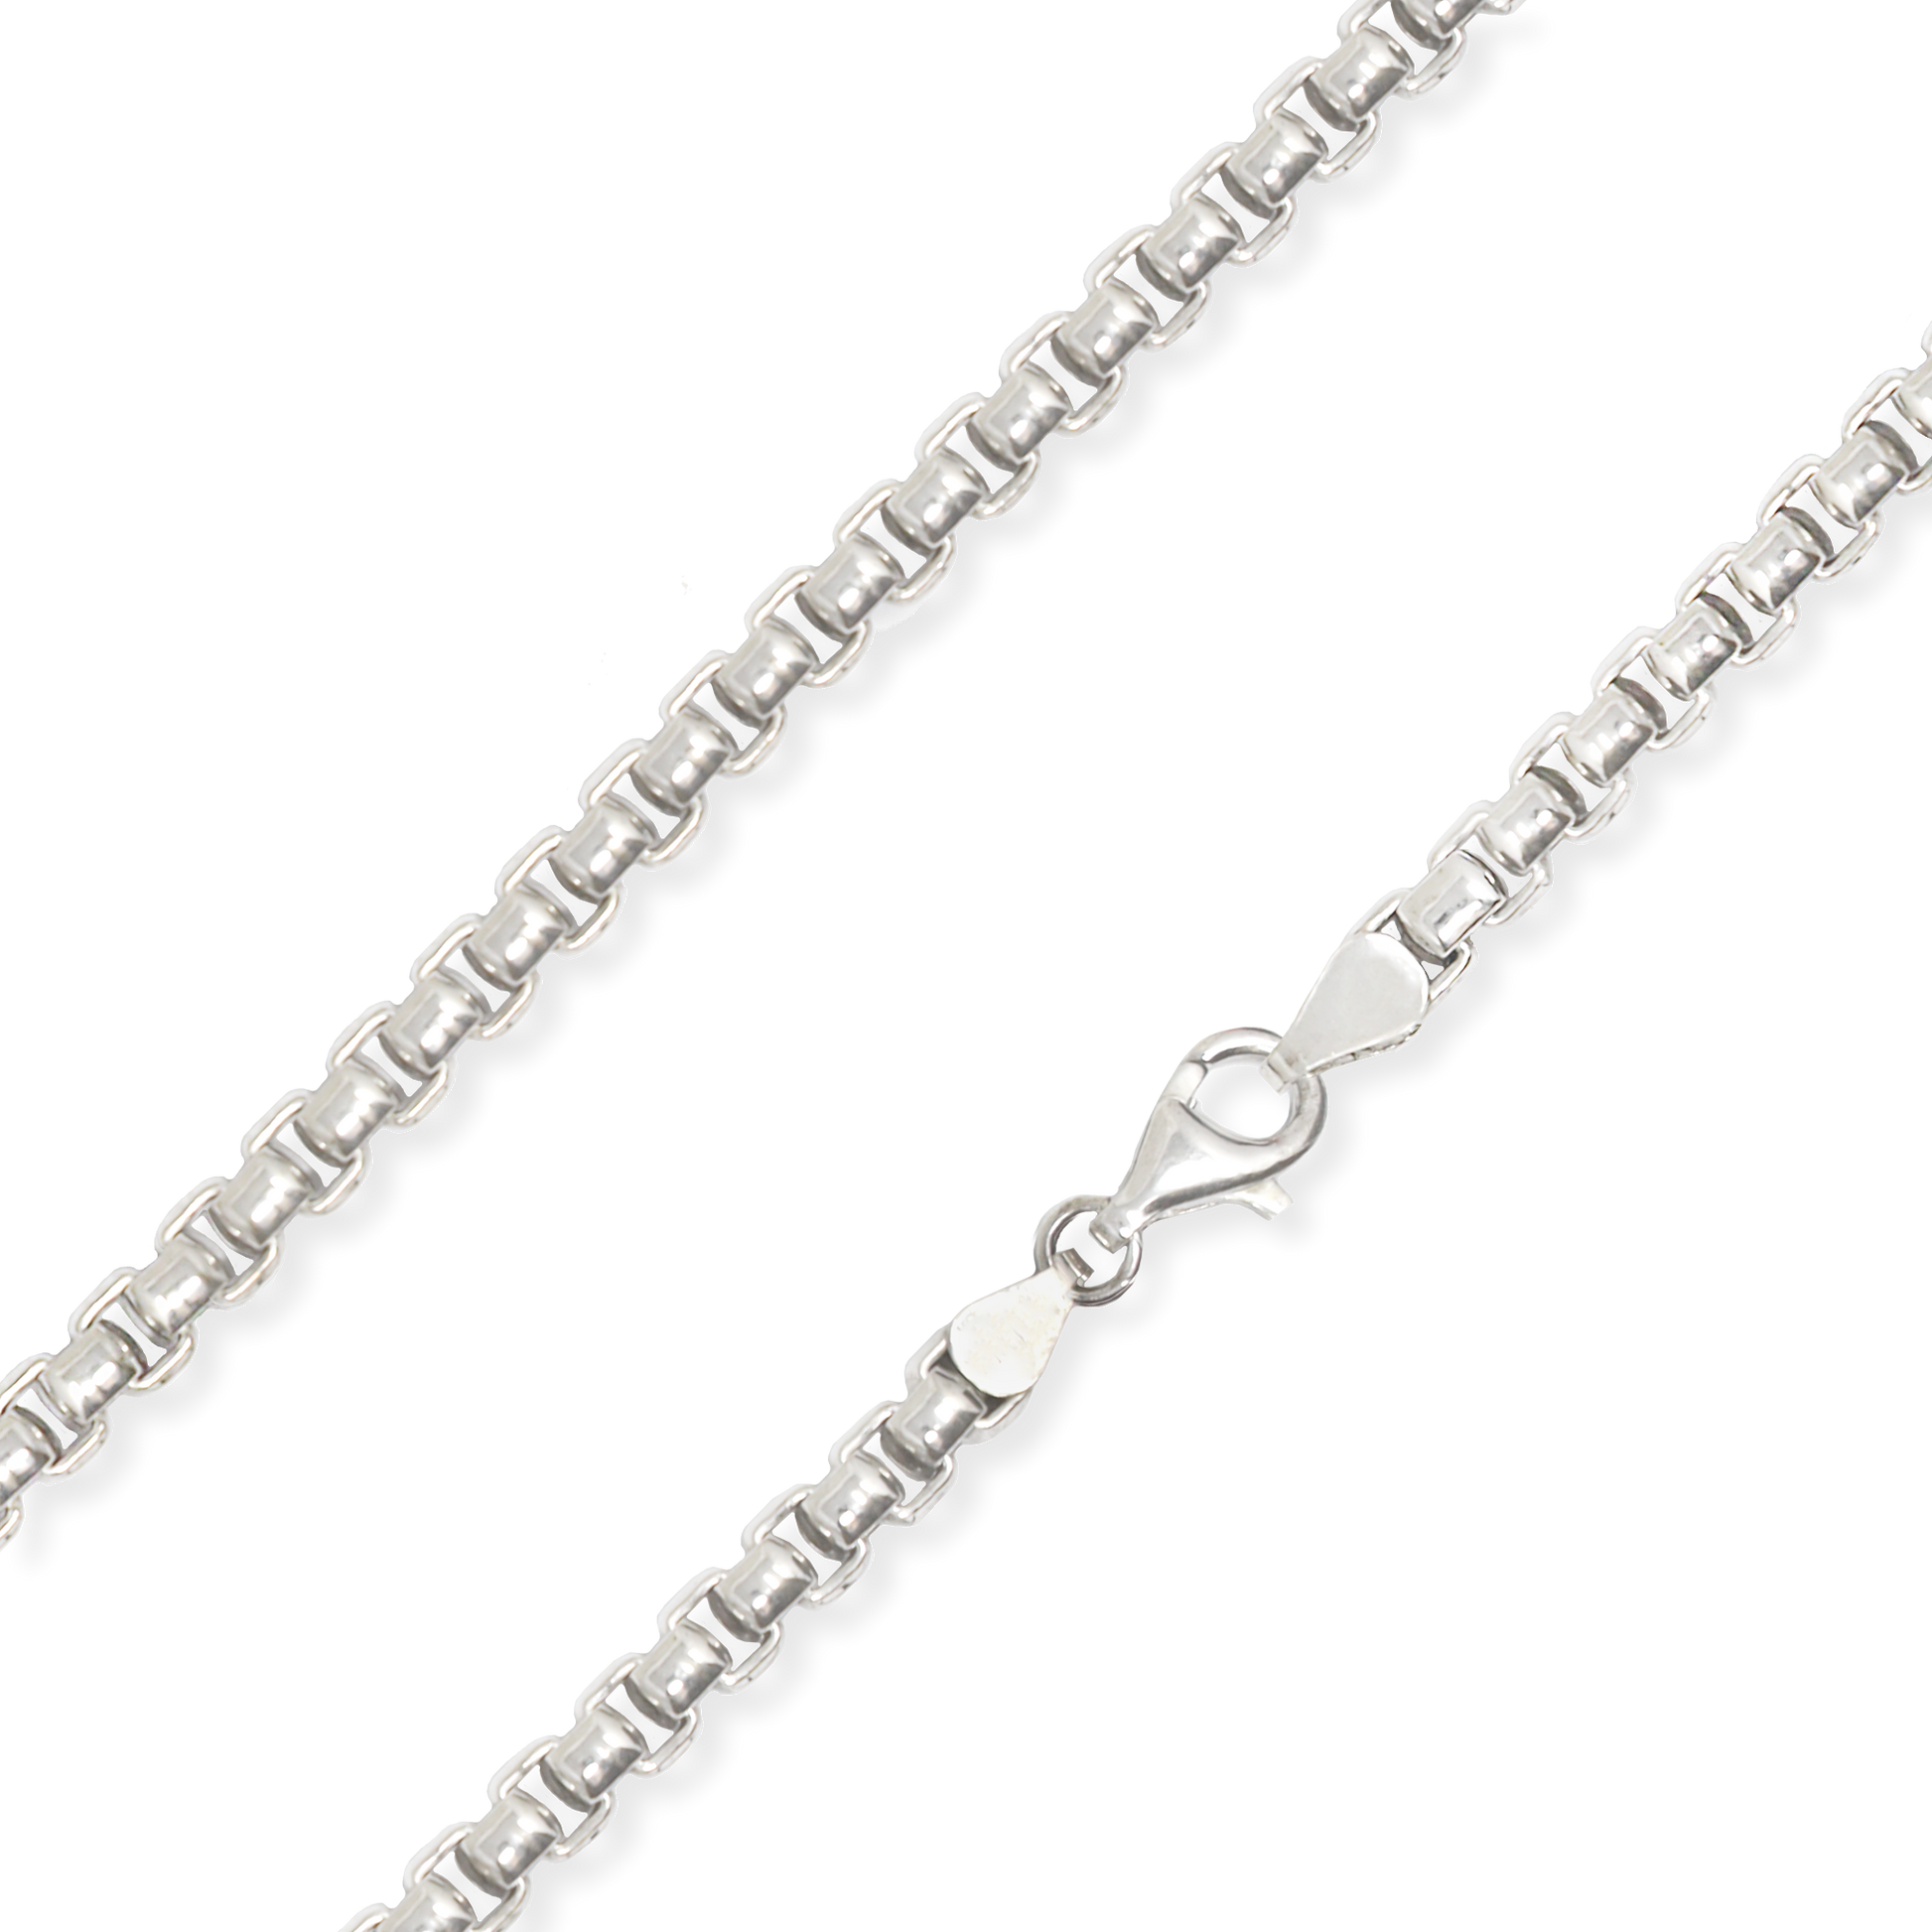 Franco Stellari Round Box Chain Necklace, 5.4mm